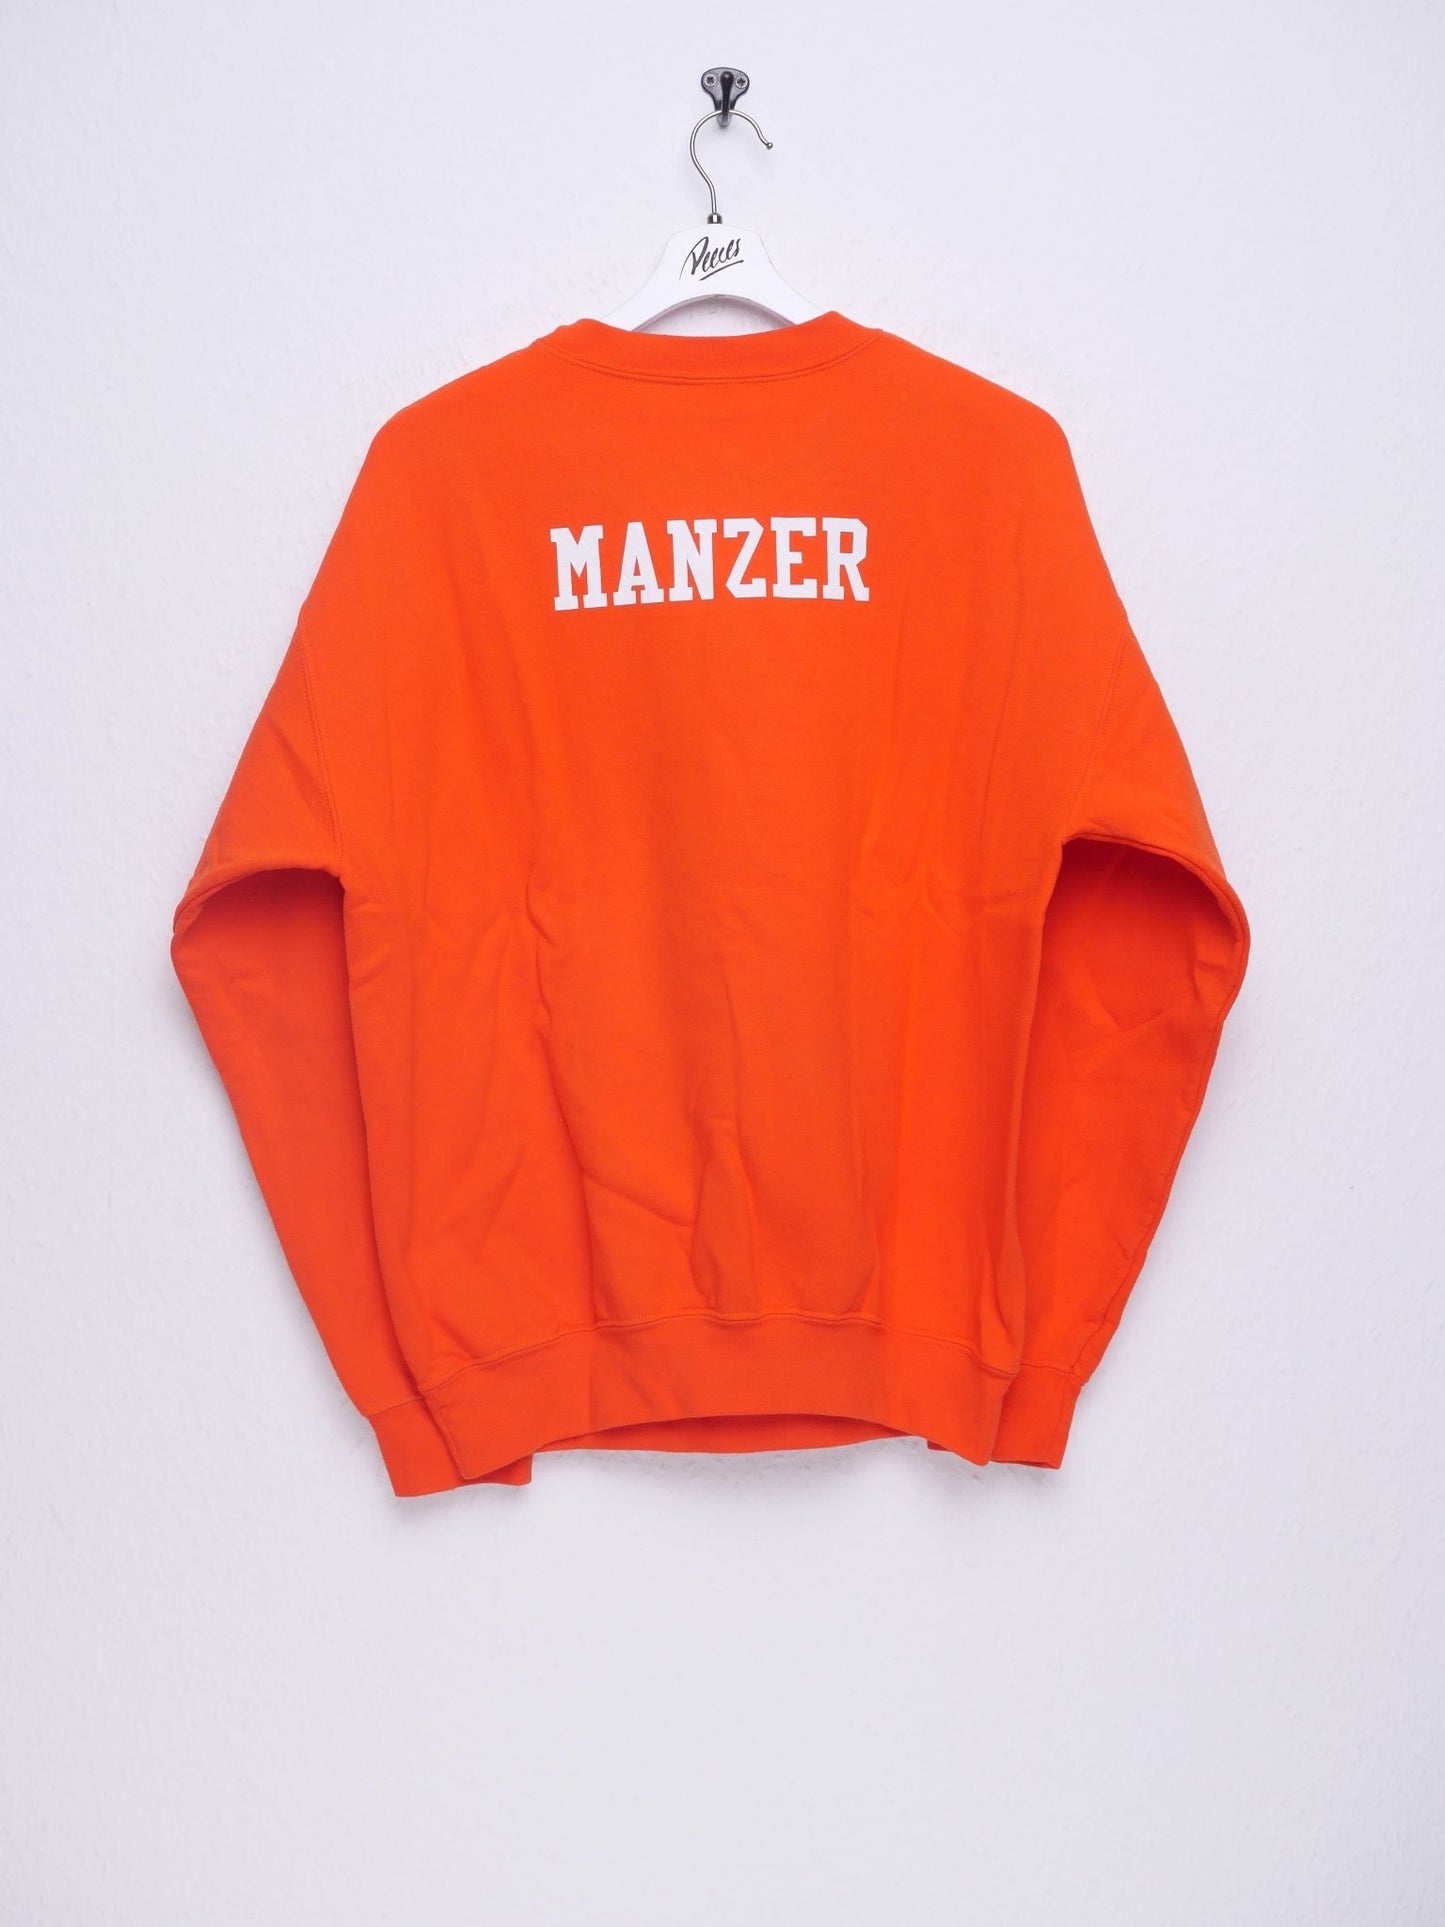 2013 West Varsity printed Spellout orange Sweater - Peeces